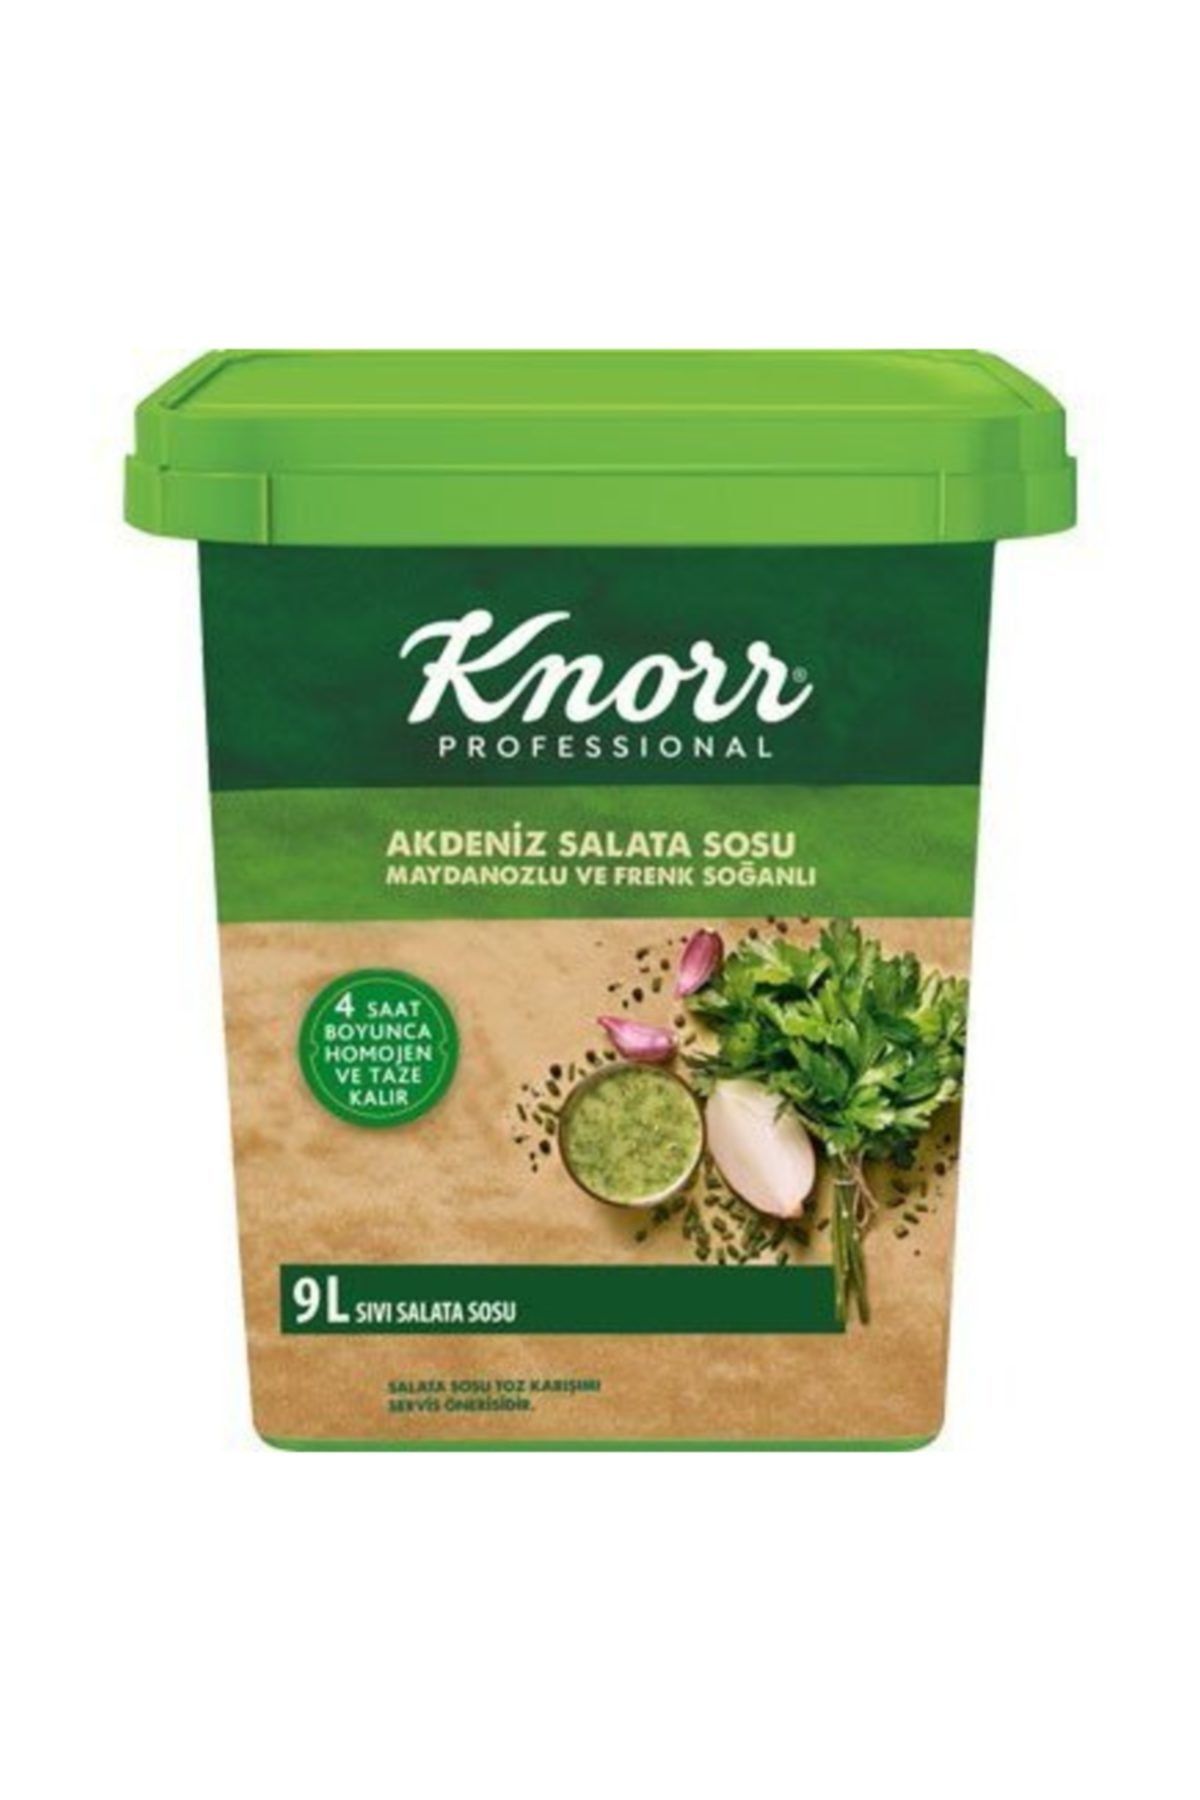 Knorr Akdeniz Salata Sosu 1 kg